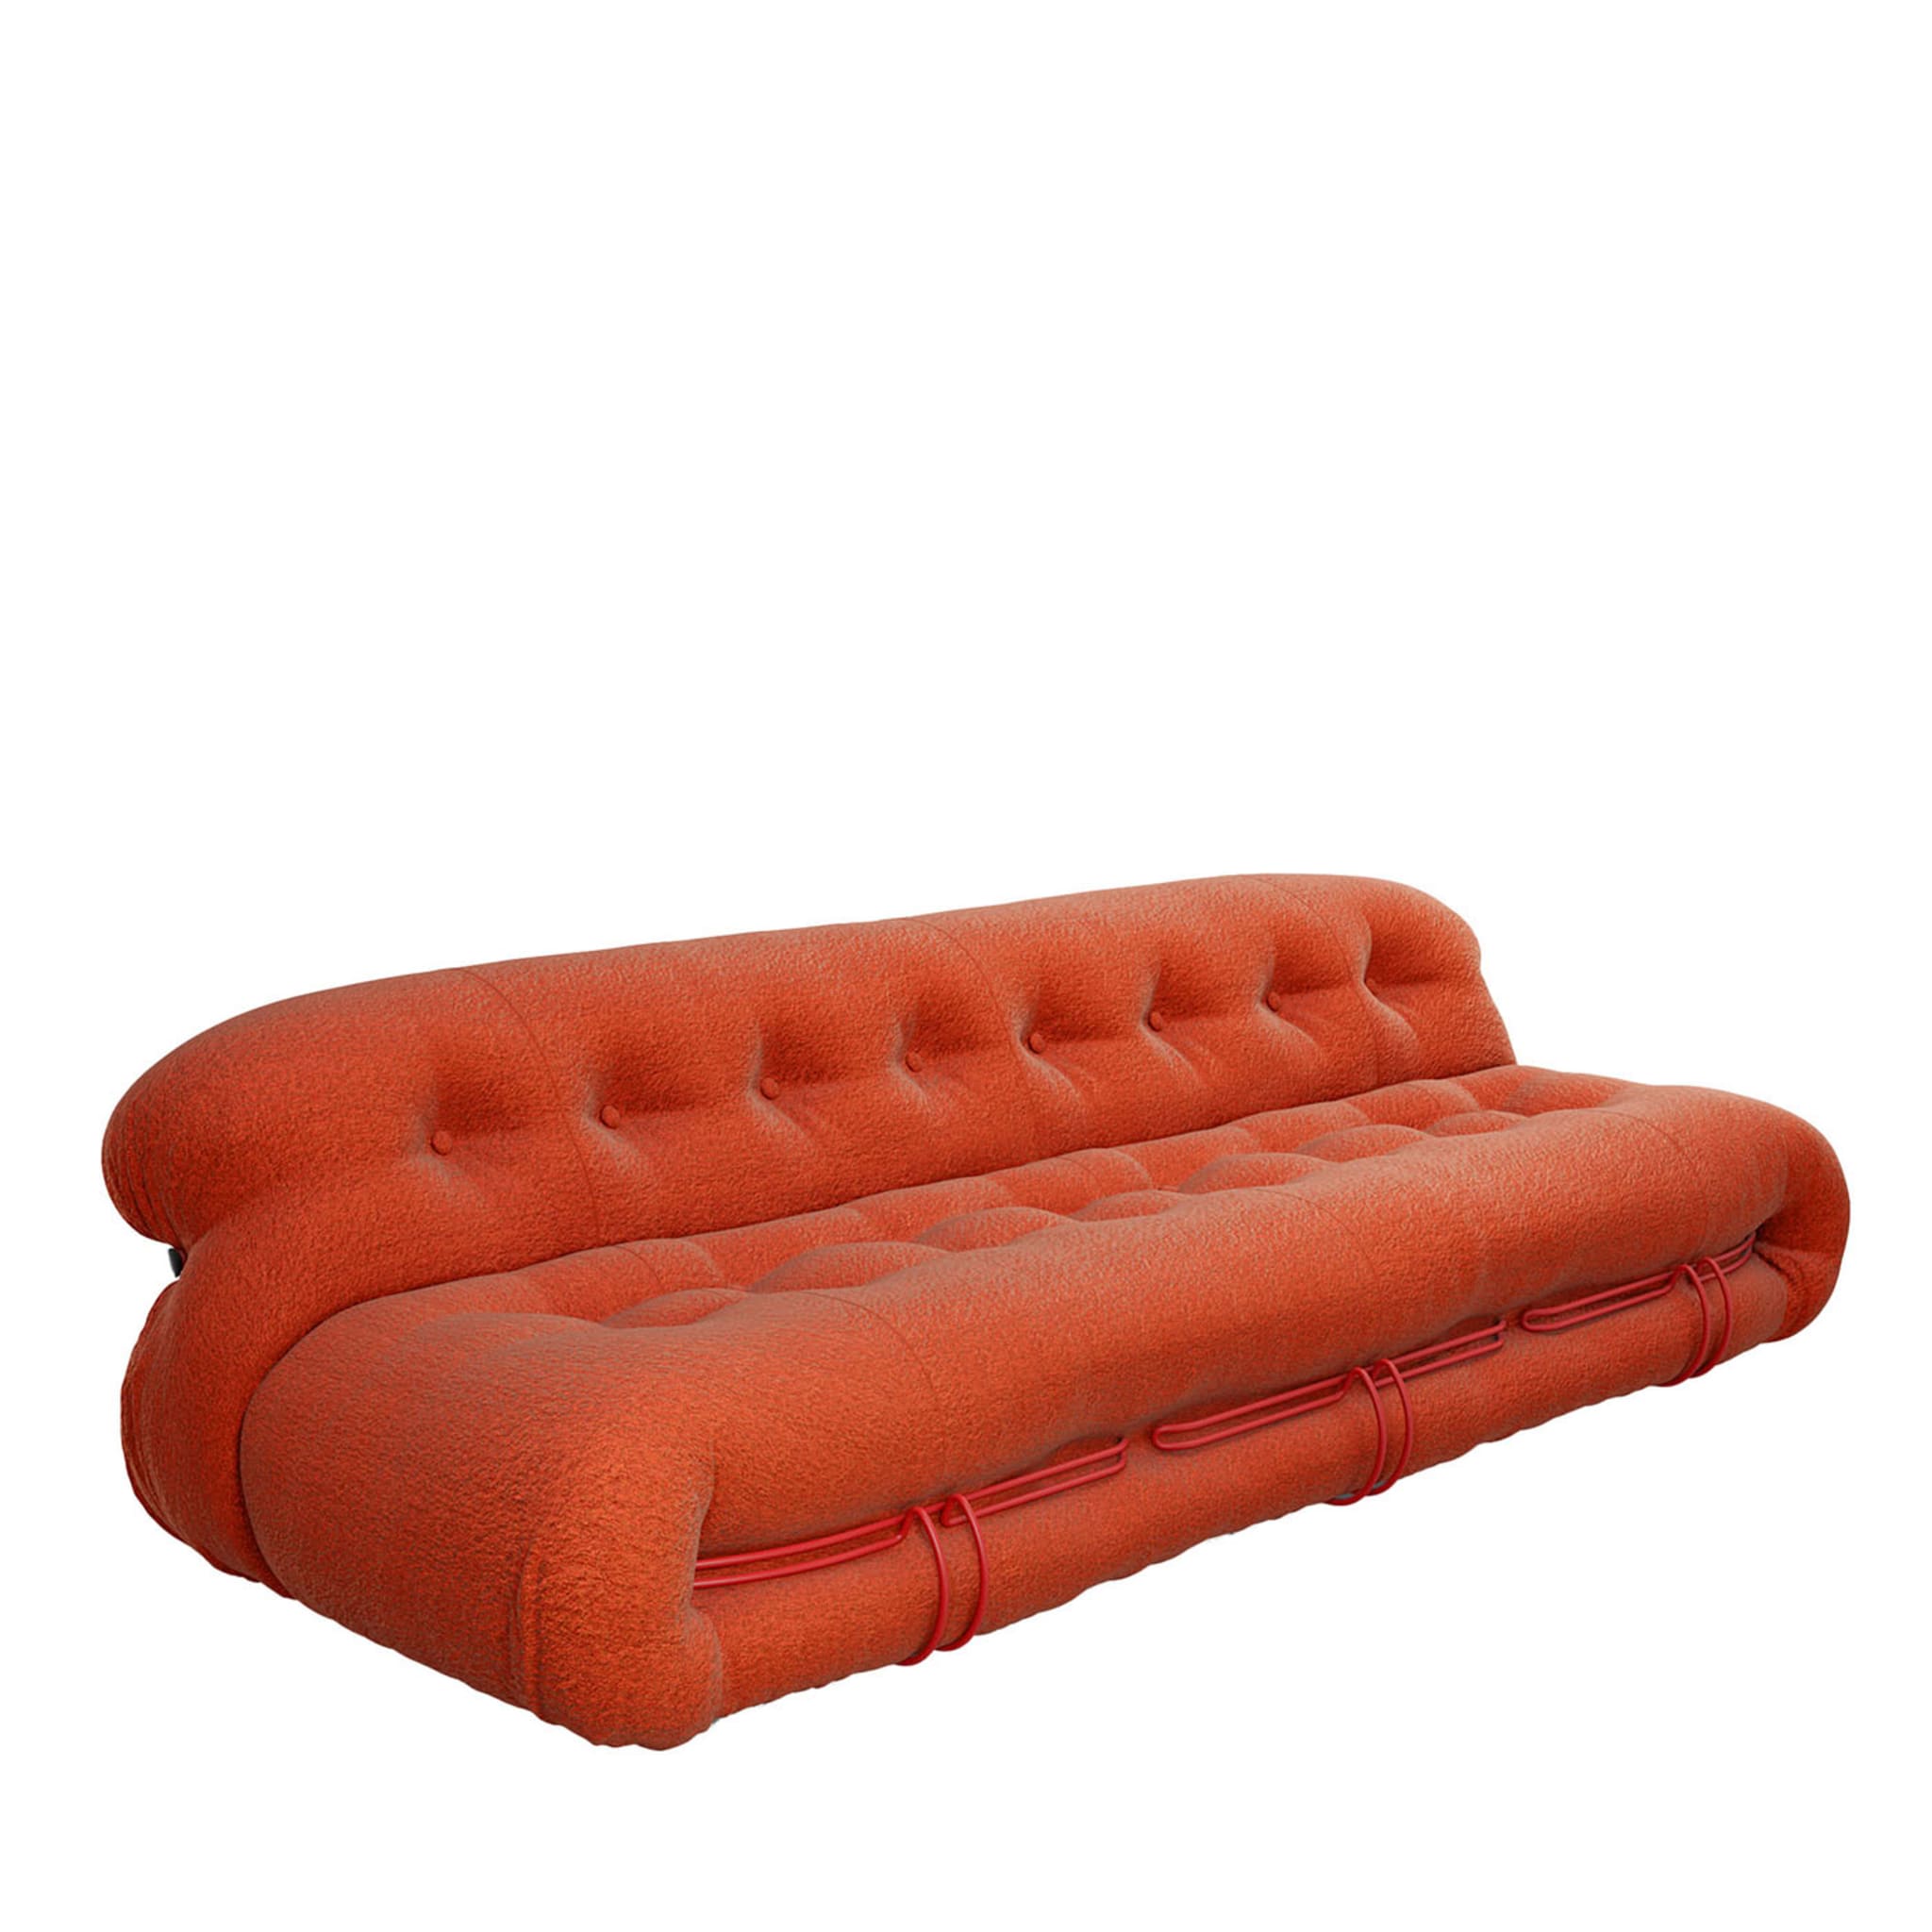 Soriana 3-Seater Orange Sofa by Afra & Tobia Scarpa - Main view